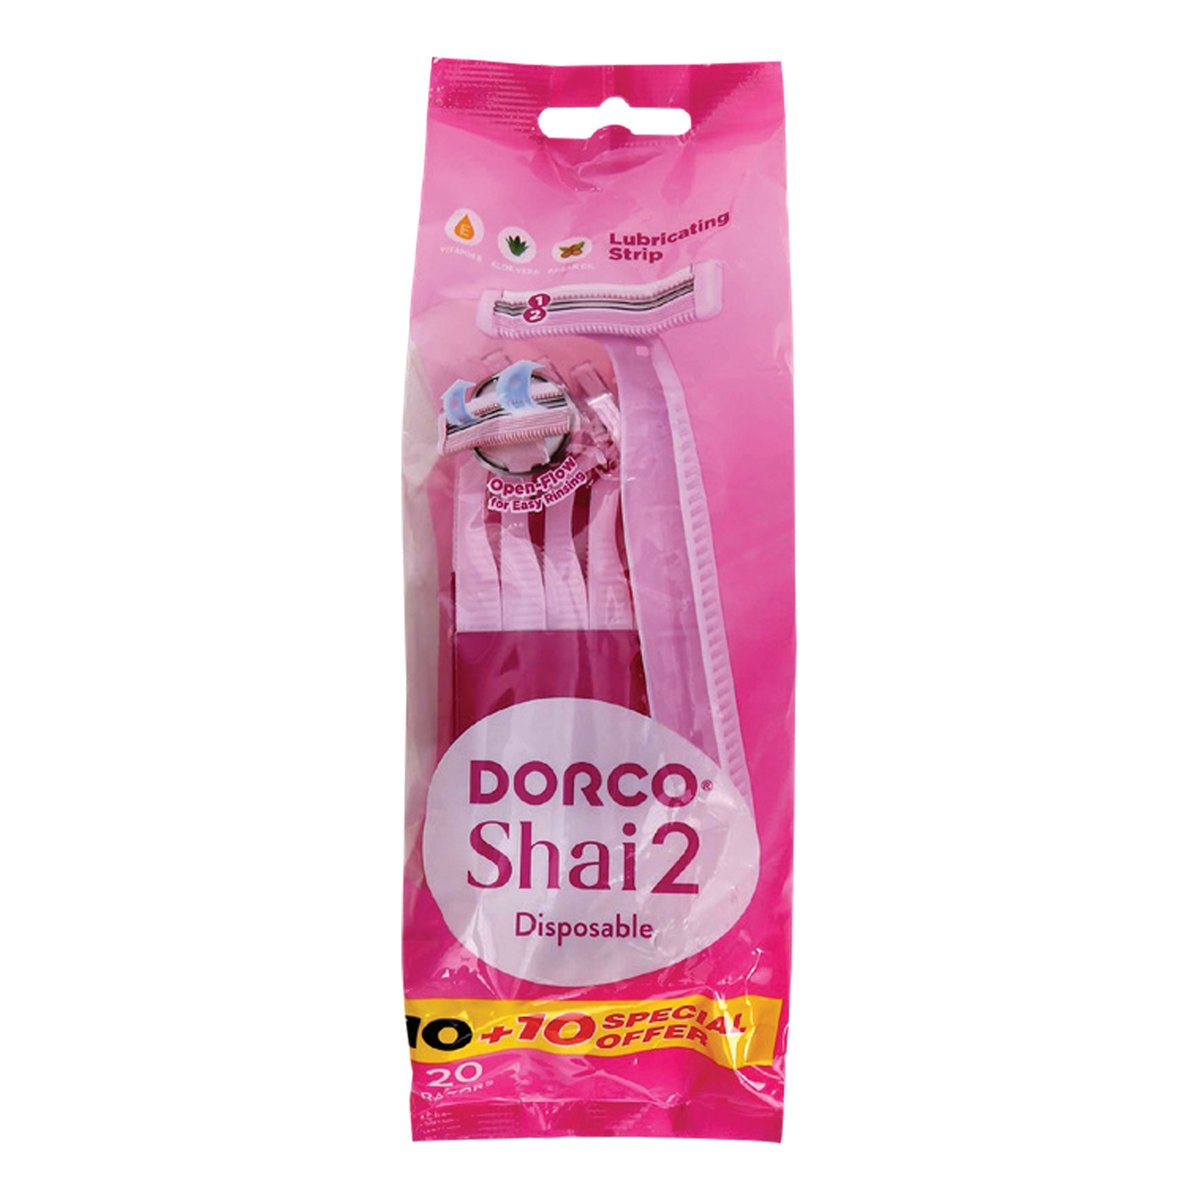 Dorco Shai 2 Disposable Razor For Women 10+10